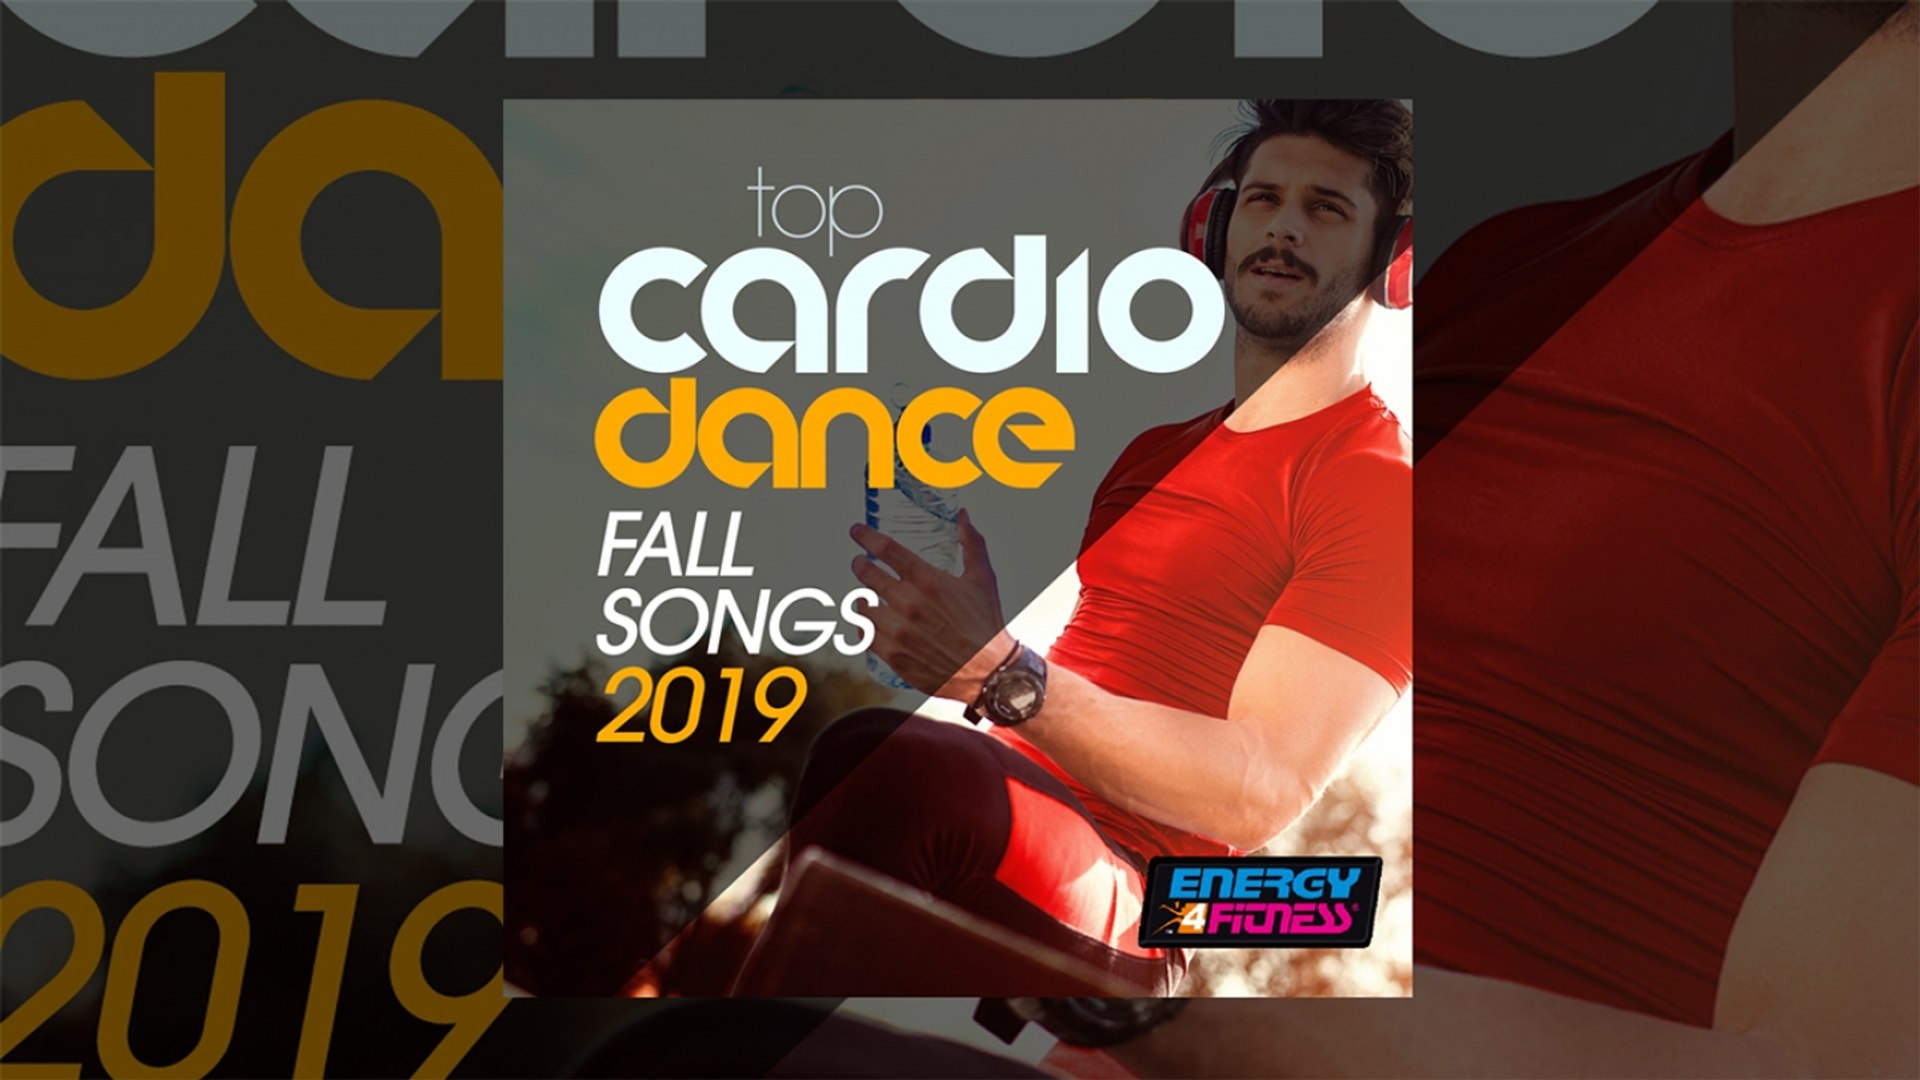 E4F - Top Cardio Dance Fall Songs 2019 - Fitness & Music 2019